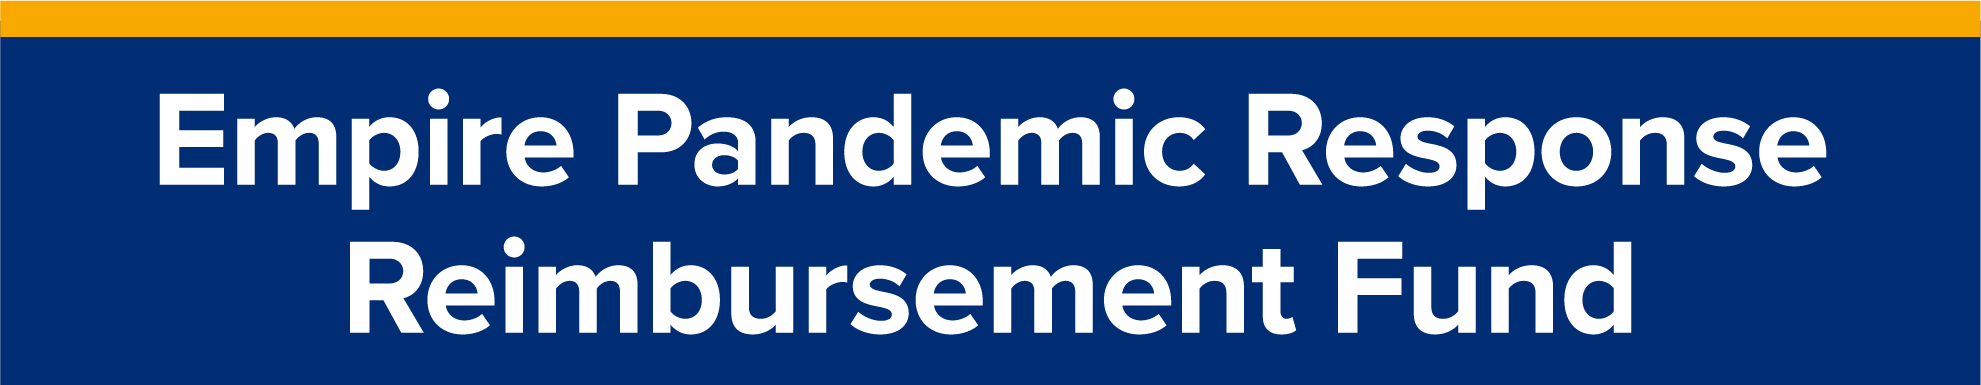 Empire Pandemic Response Reimbursement Fund logo